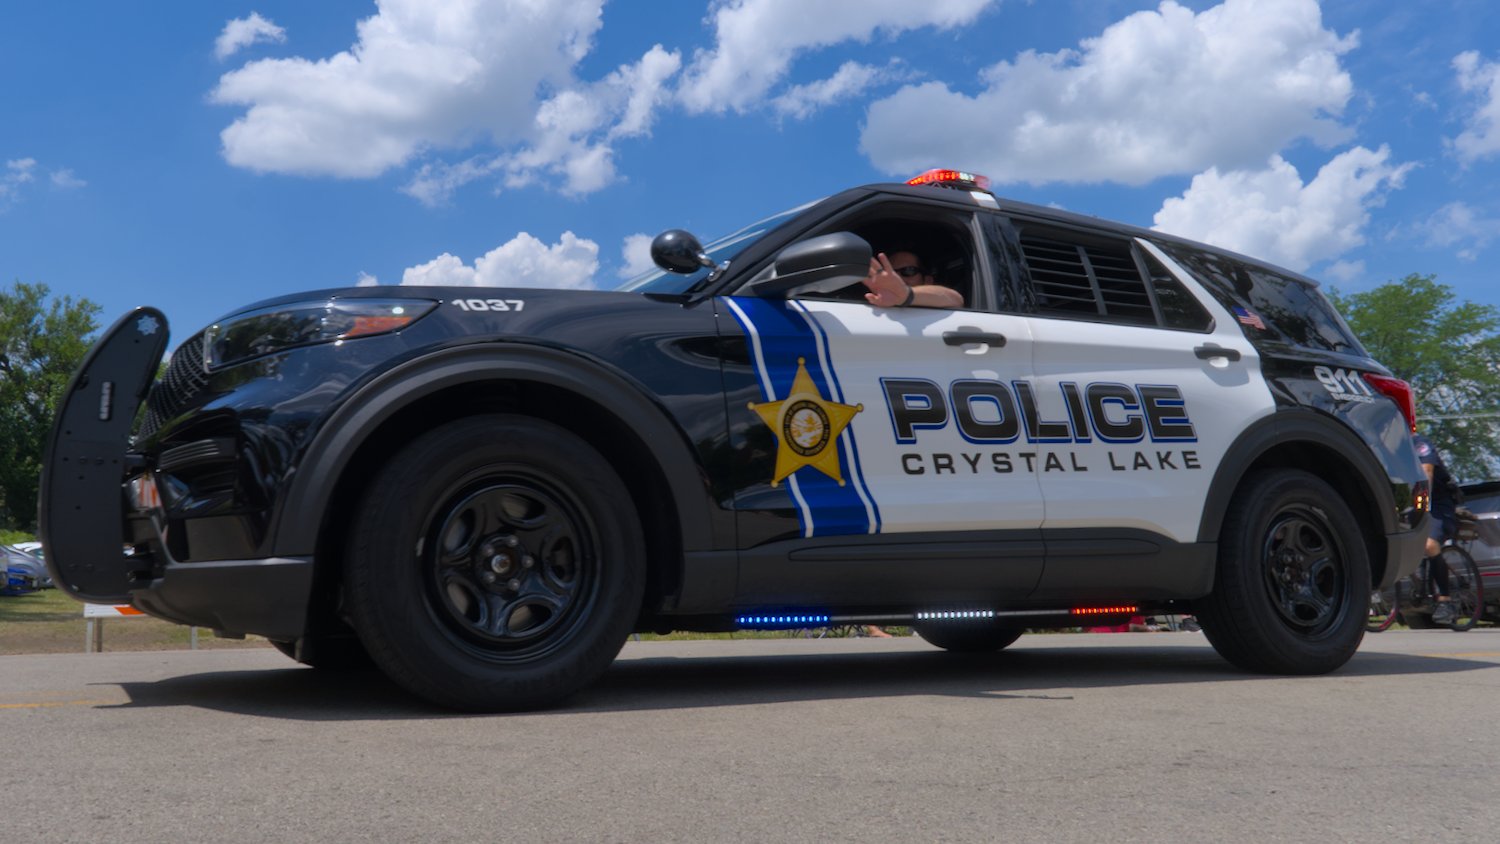 Crystal Lake Police car.